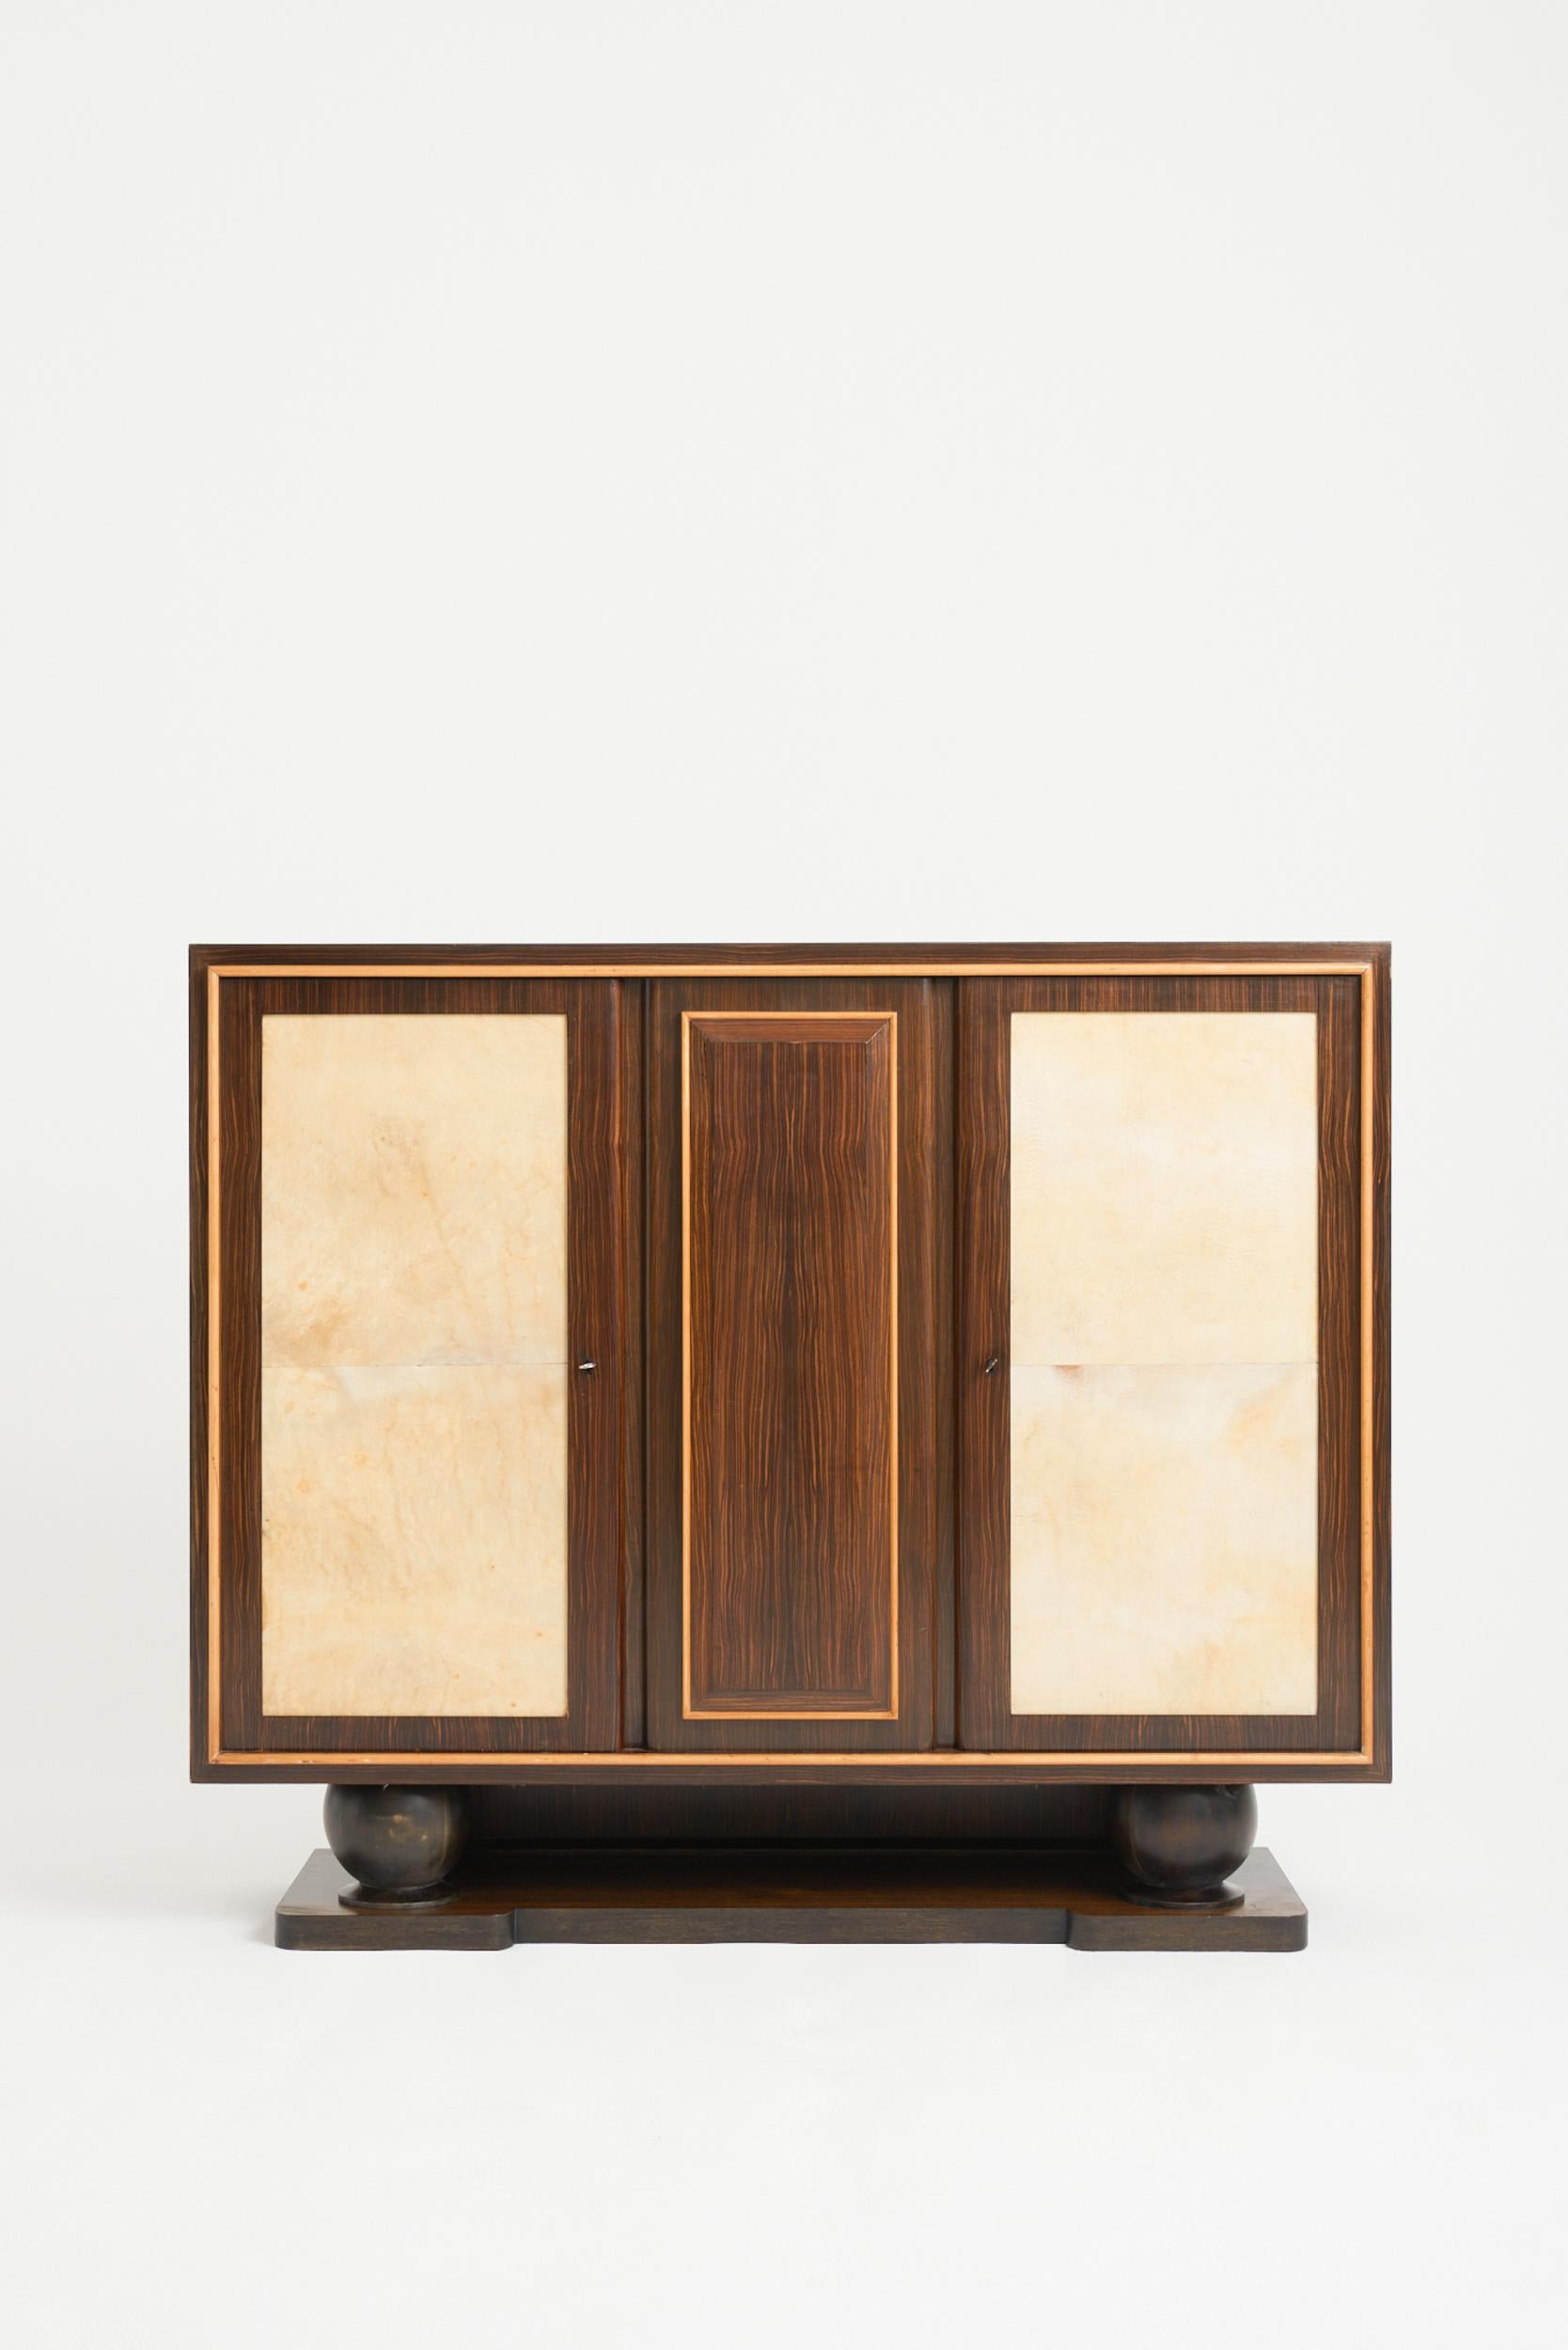 An Art Deco macassar ebony and velum cabinet
France, 1940s.
126 cm high by 150 cm wide by 44 cm depth